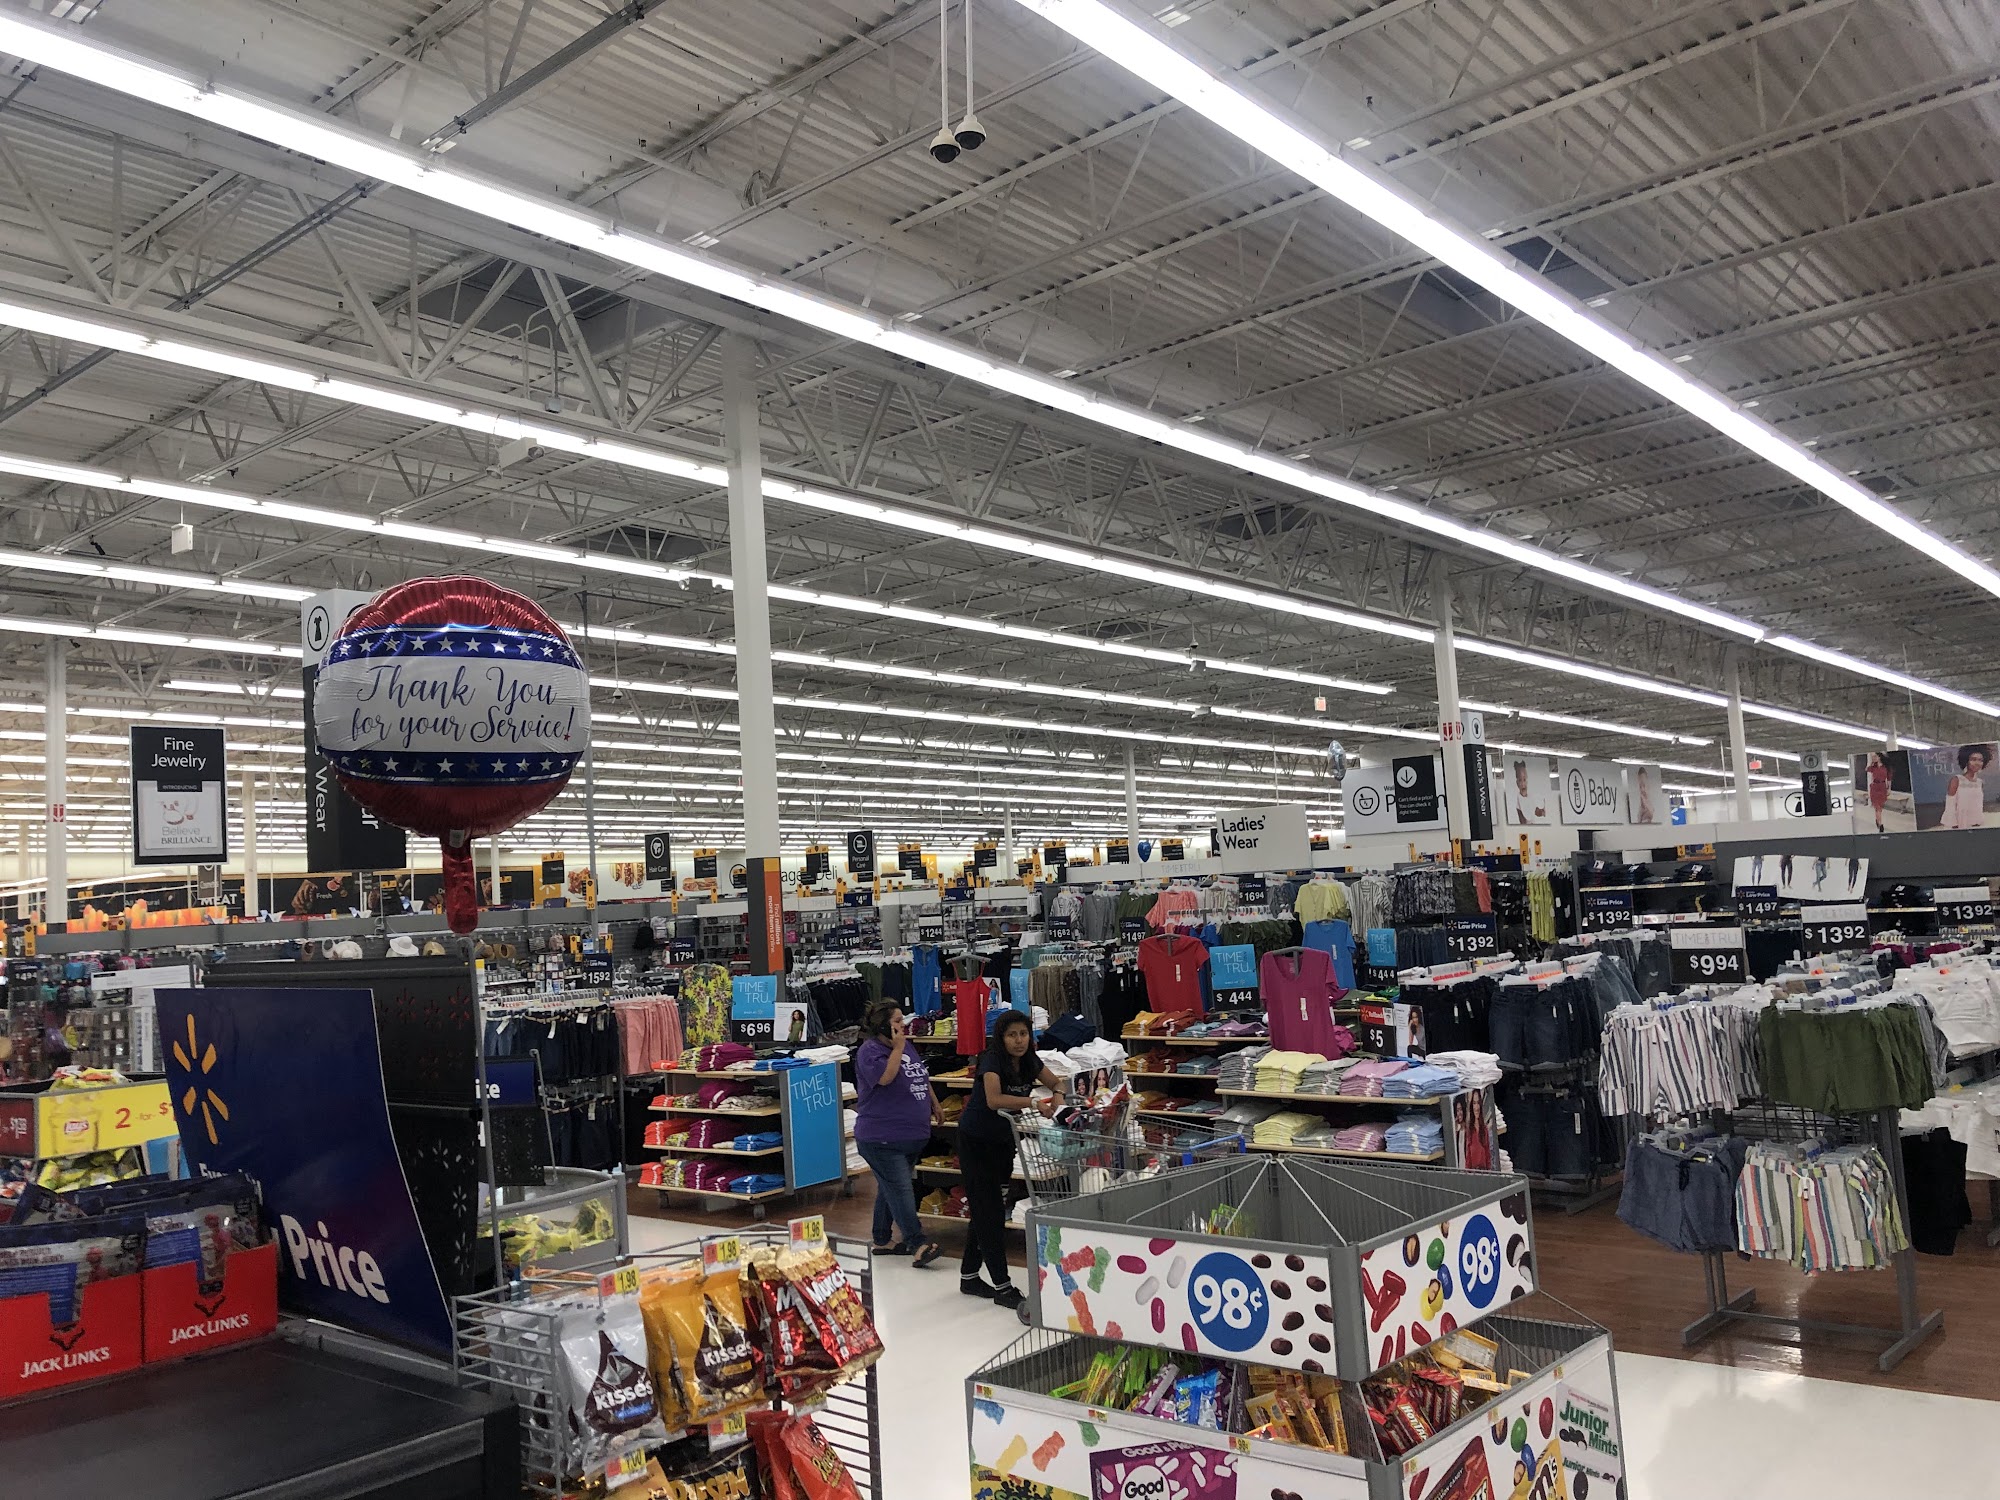 Walmart Connection Center